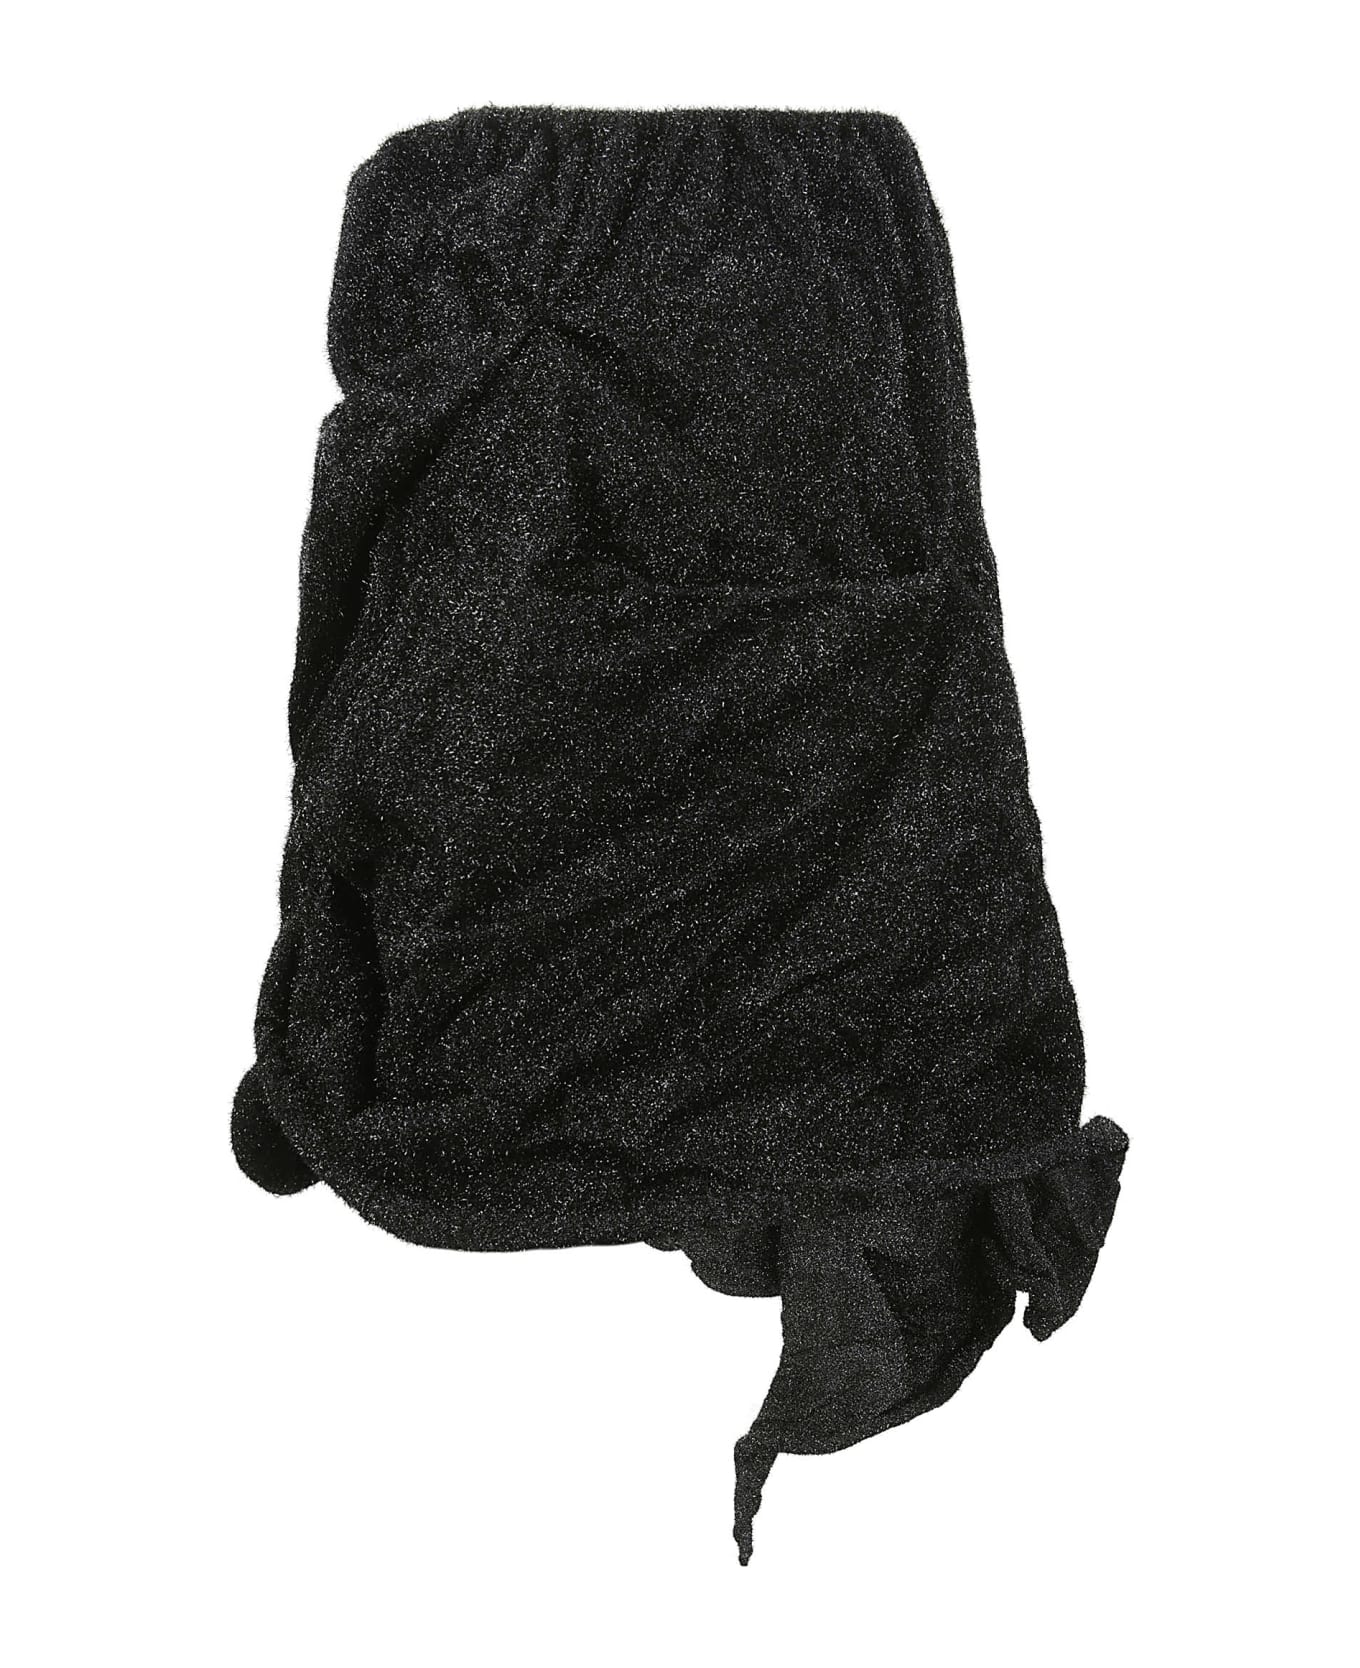 A. Roege Hove Laura Drape Skirt - BLACK